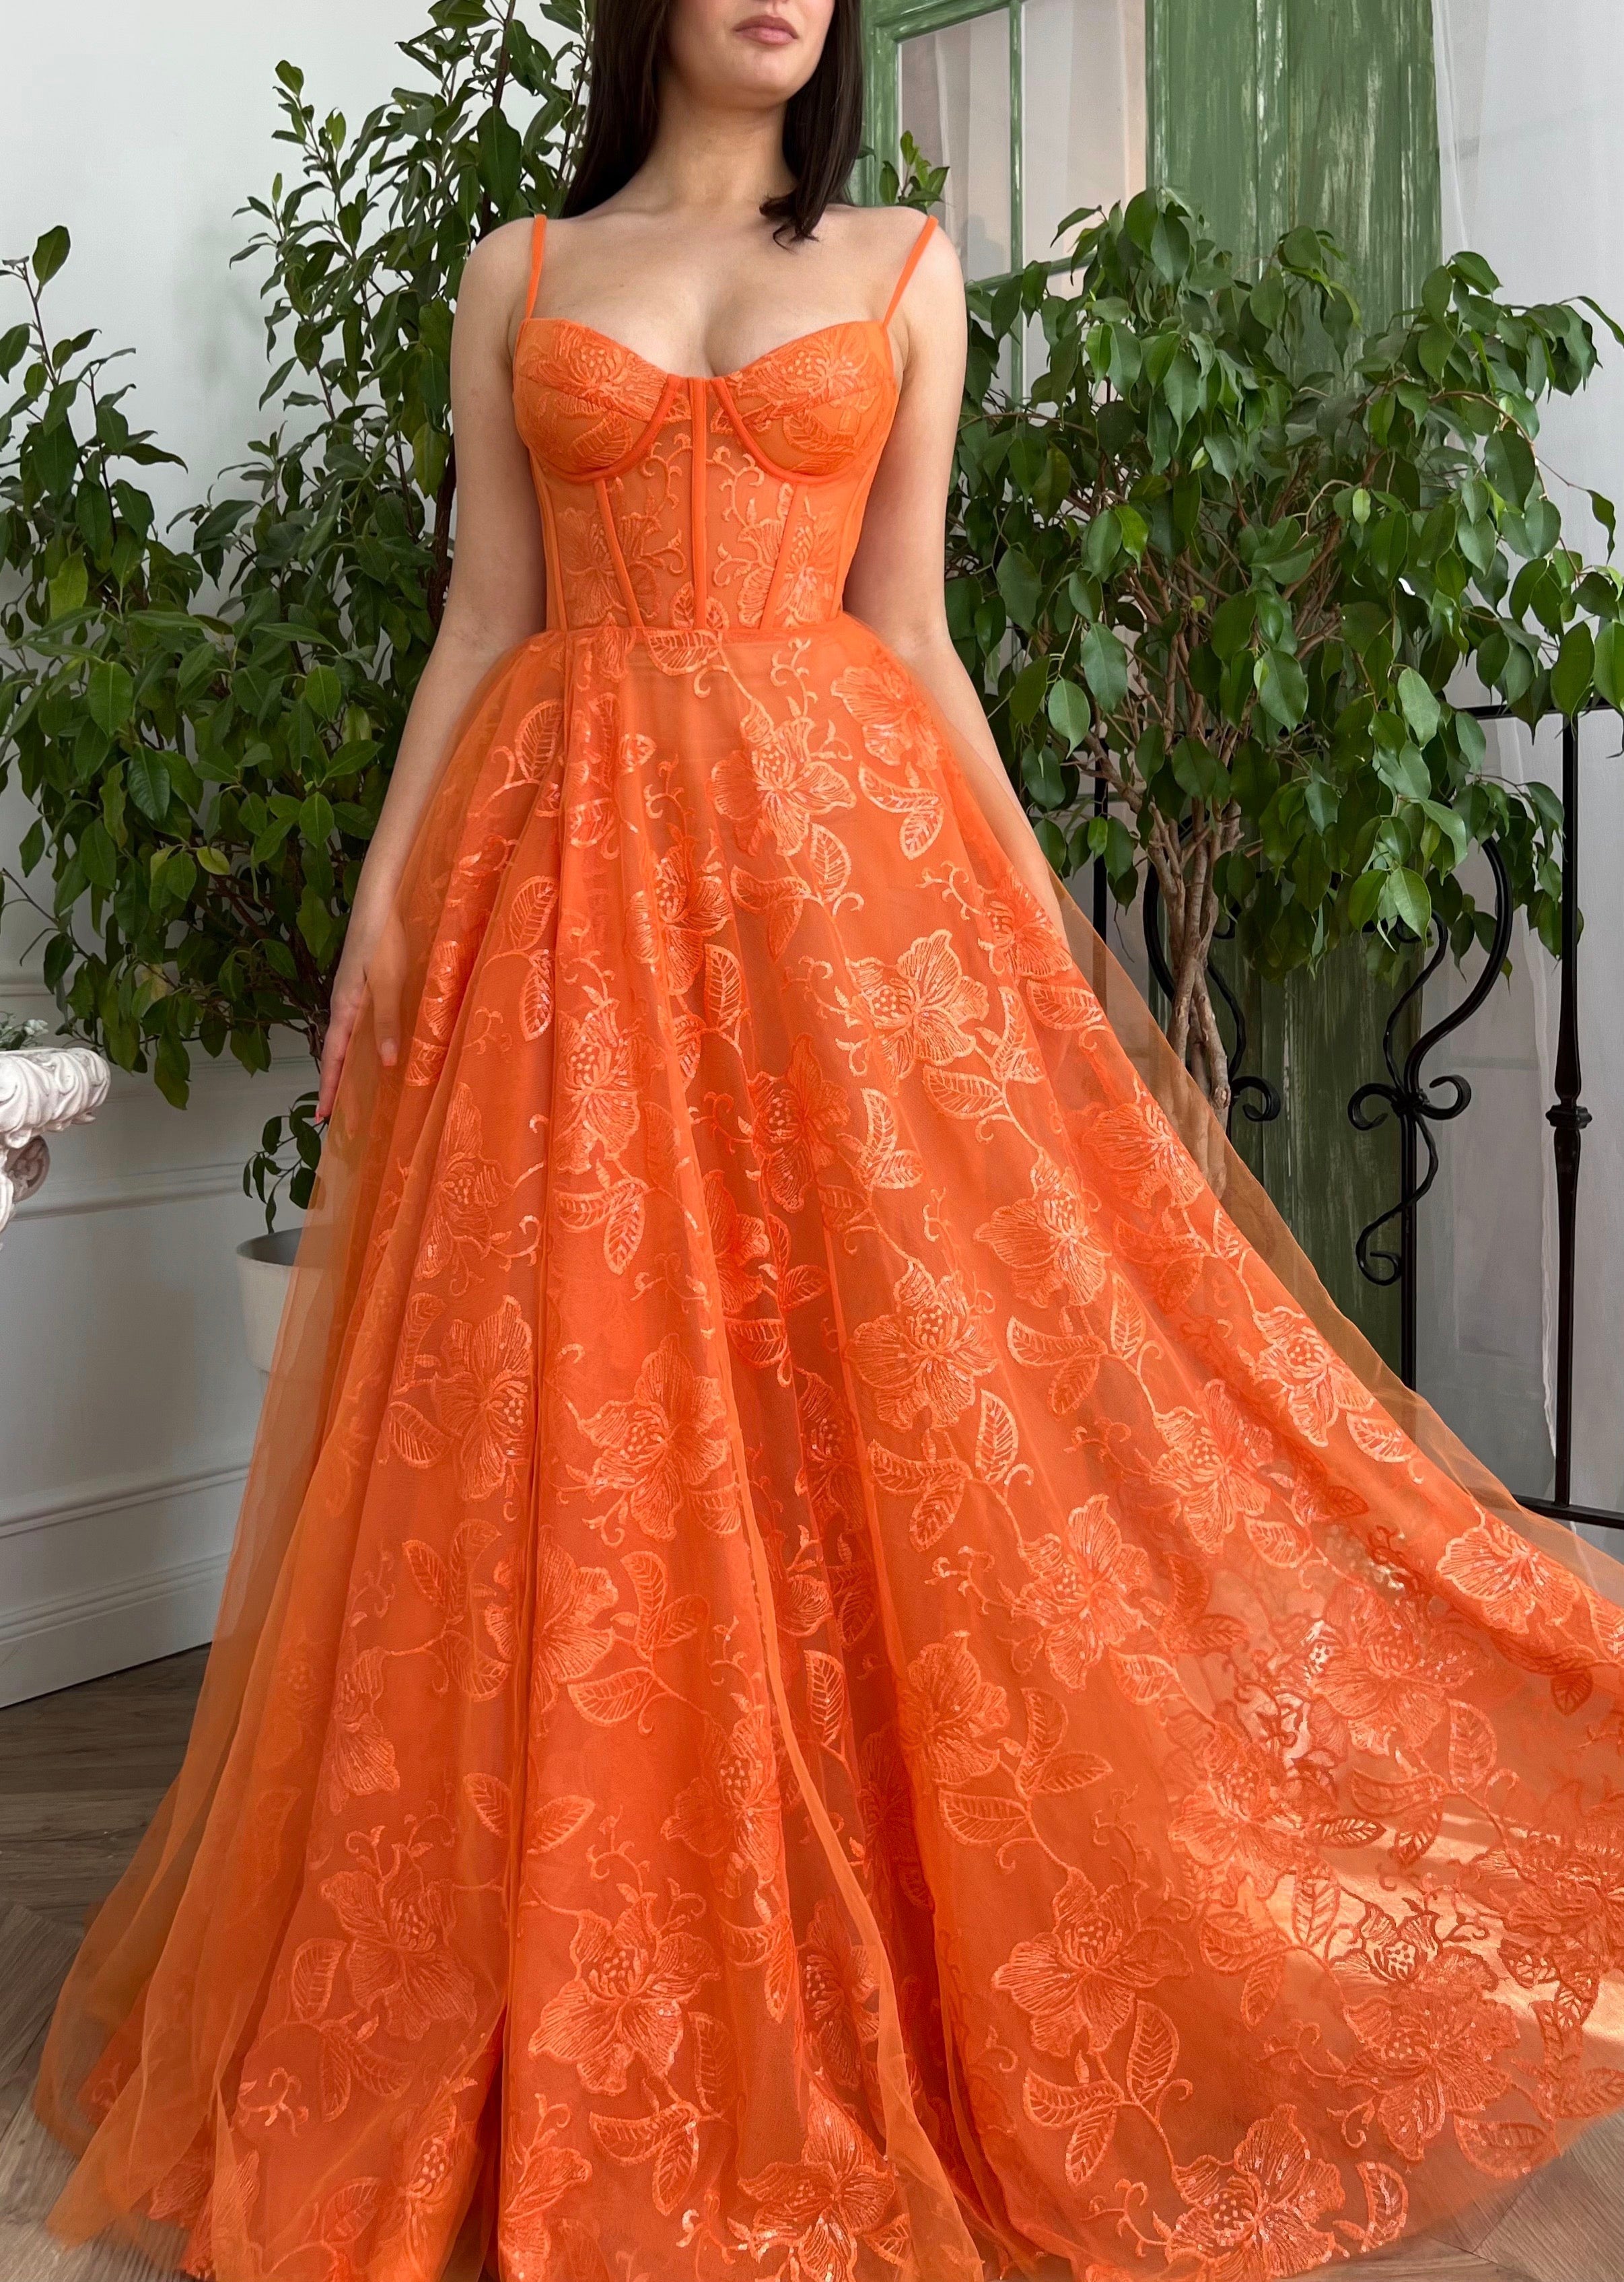 Orange A-Line dress with spaghetti straps